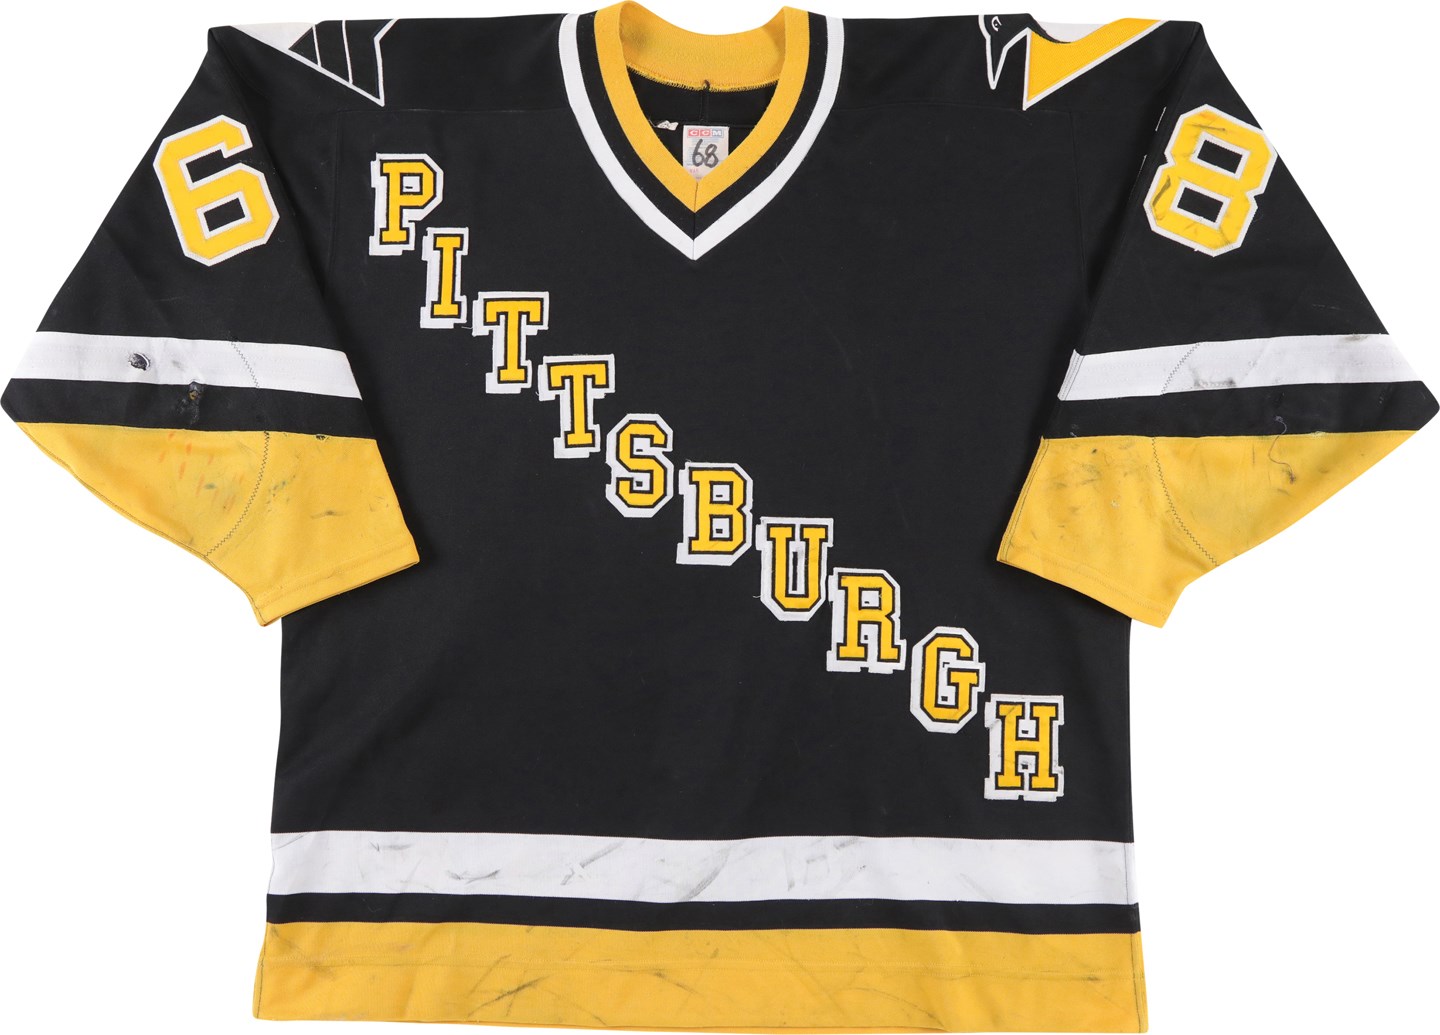 - 1994-95 Jaromir Jagr "Hammered" Pittsburgh Penguins Game Worn Jersey (Resolution Photo-Matched LOA)